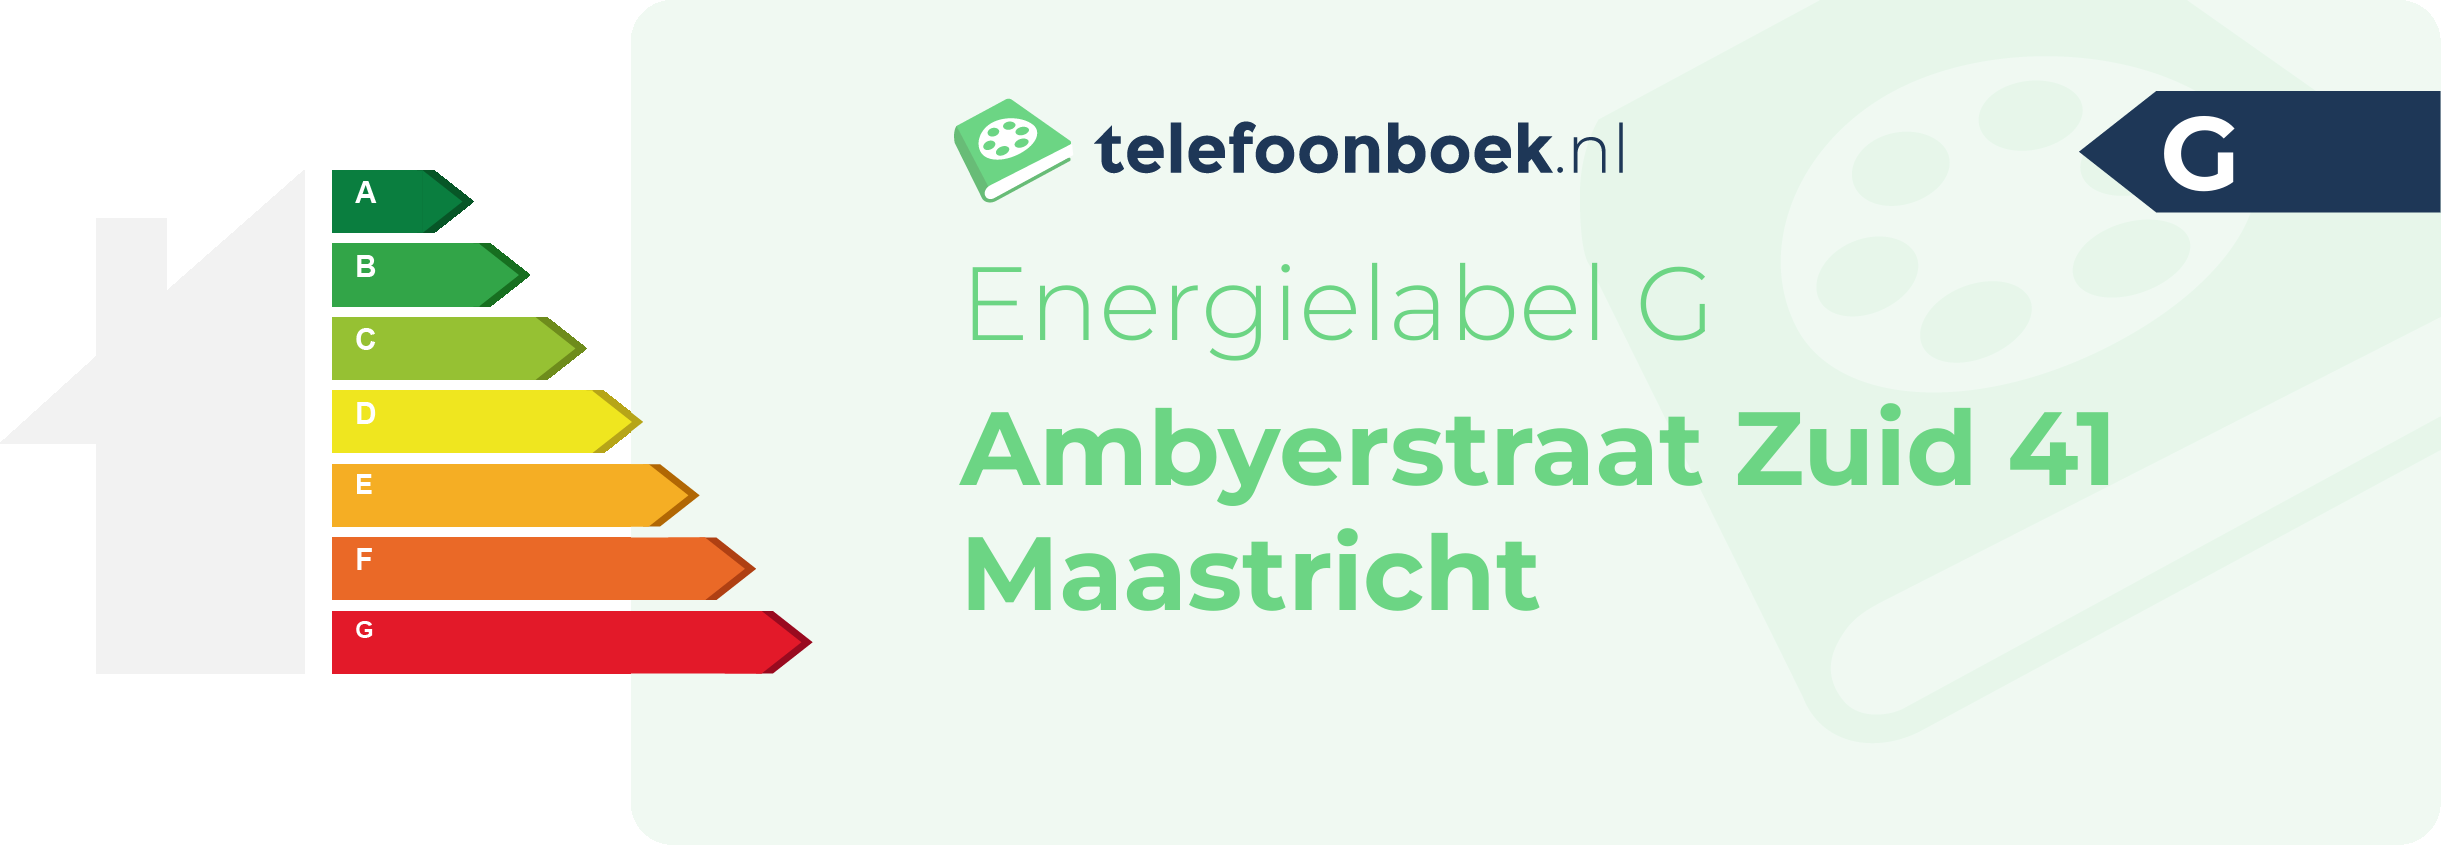 Energielabel Ambyerstraat Zuid 41 Maastricht